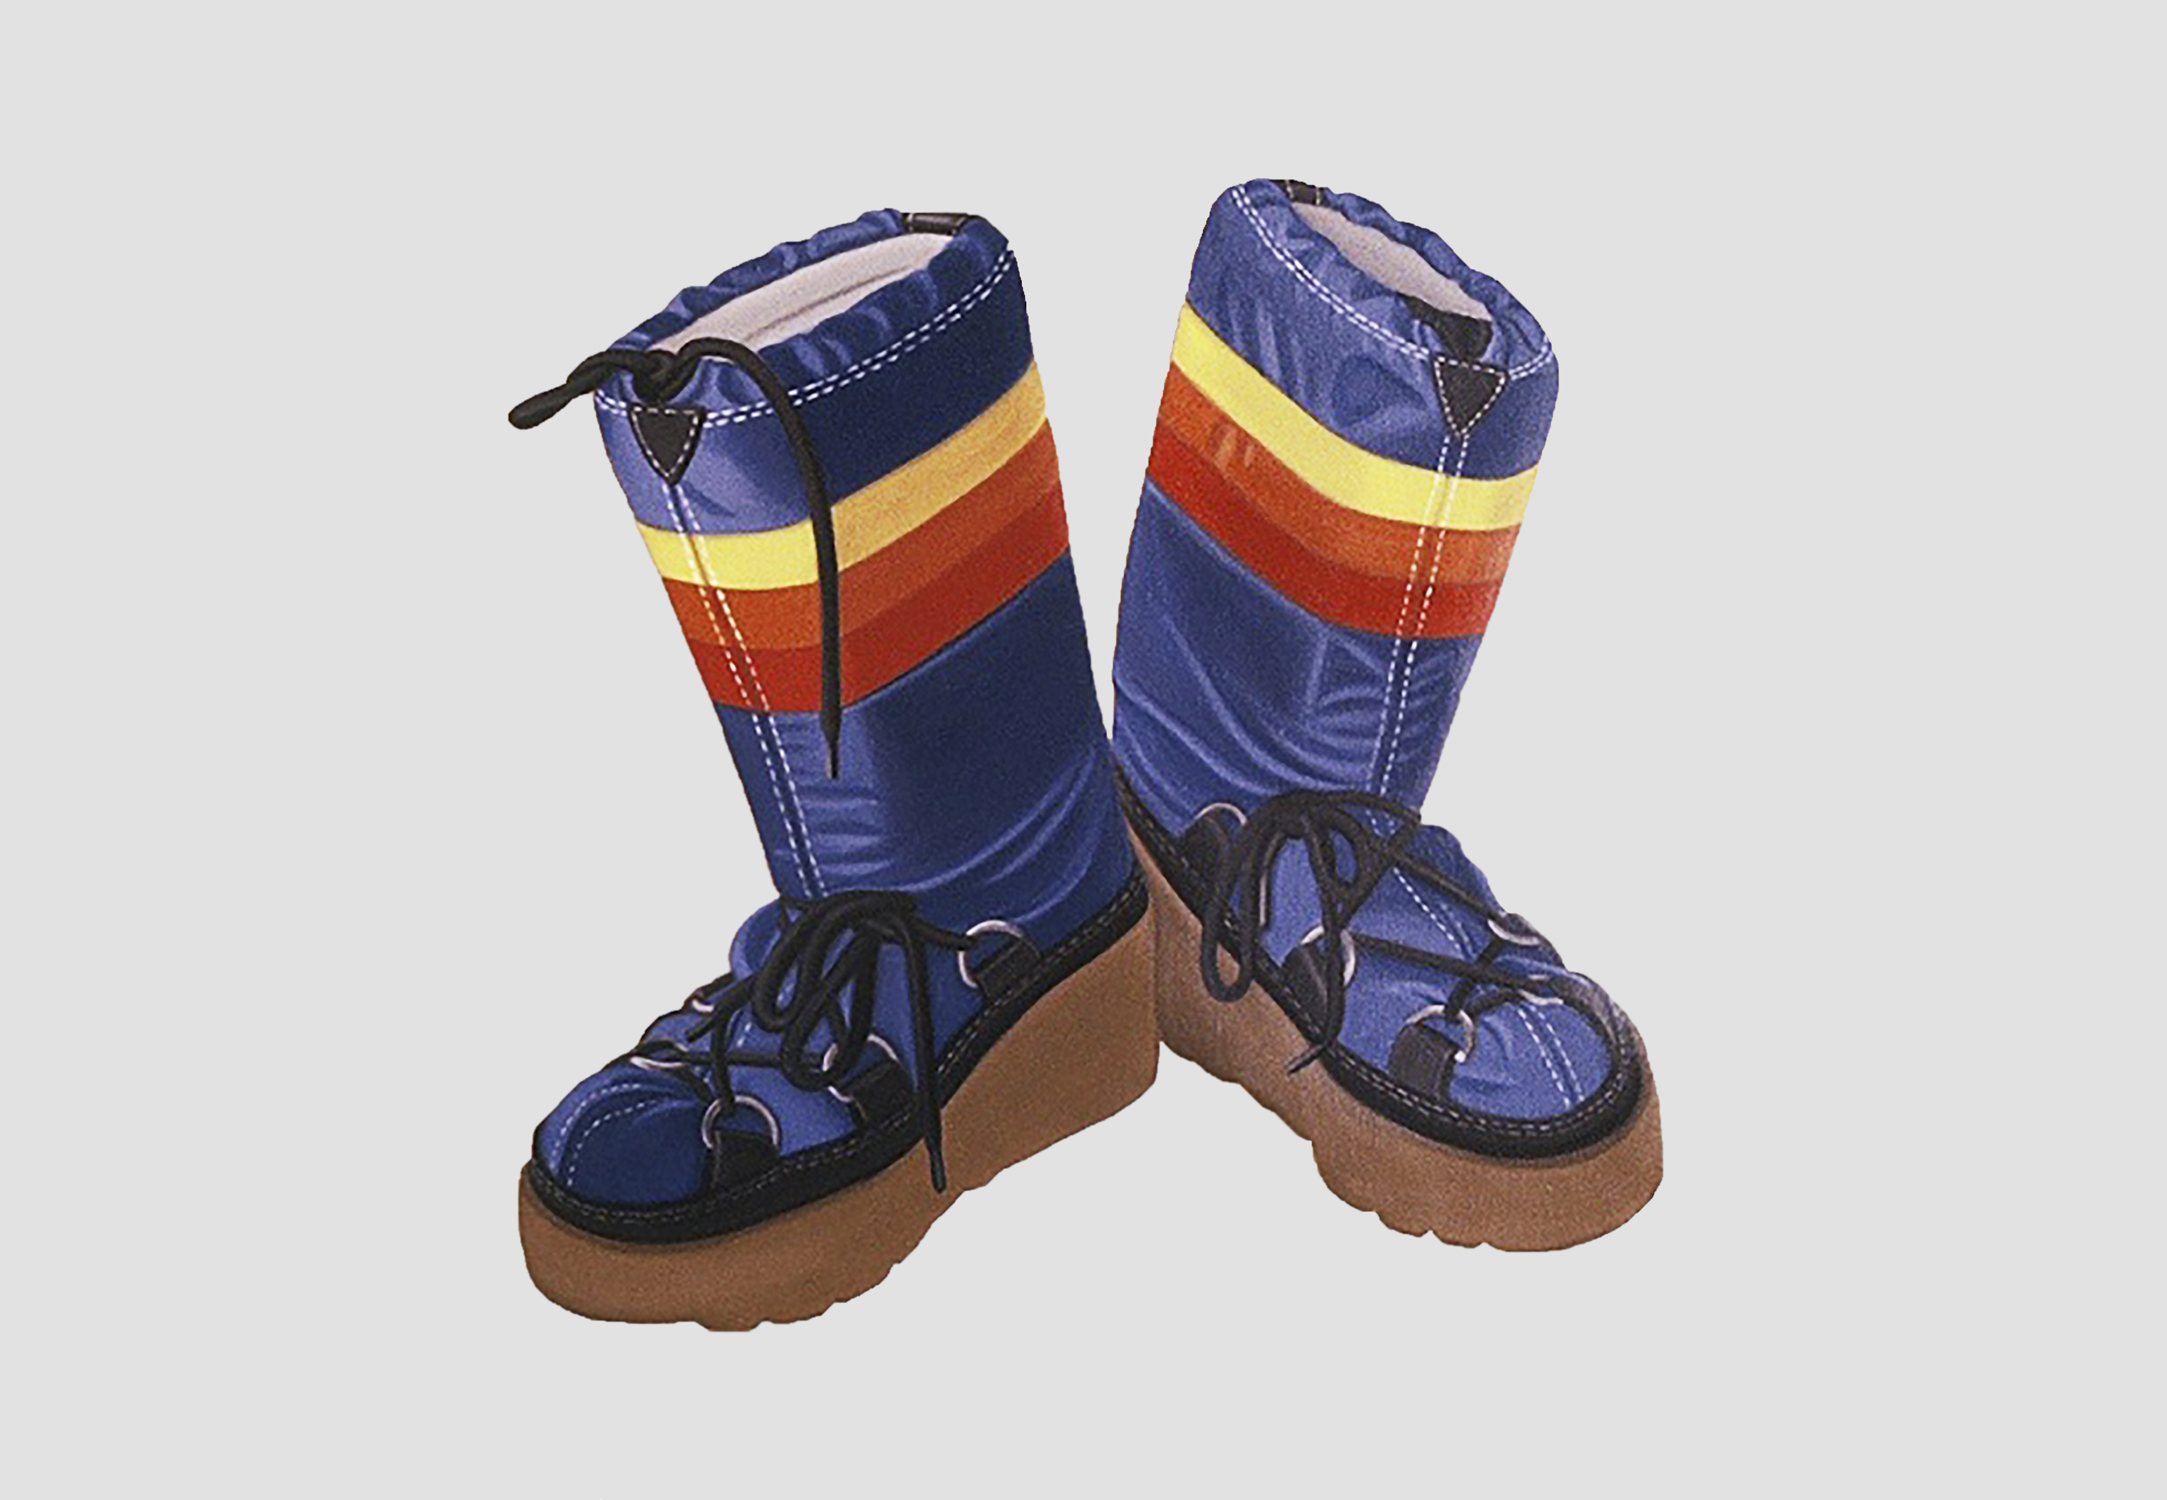  Blue Boots, 28 x 28”, 1978 